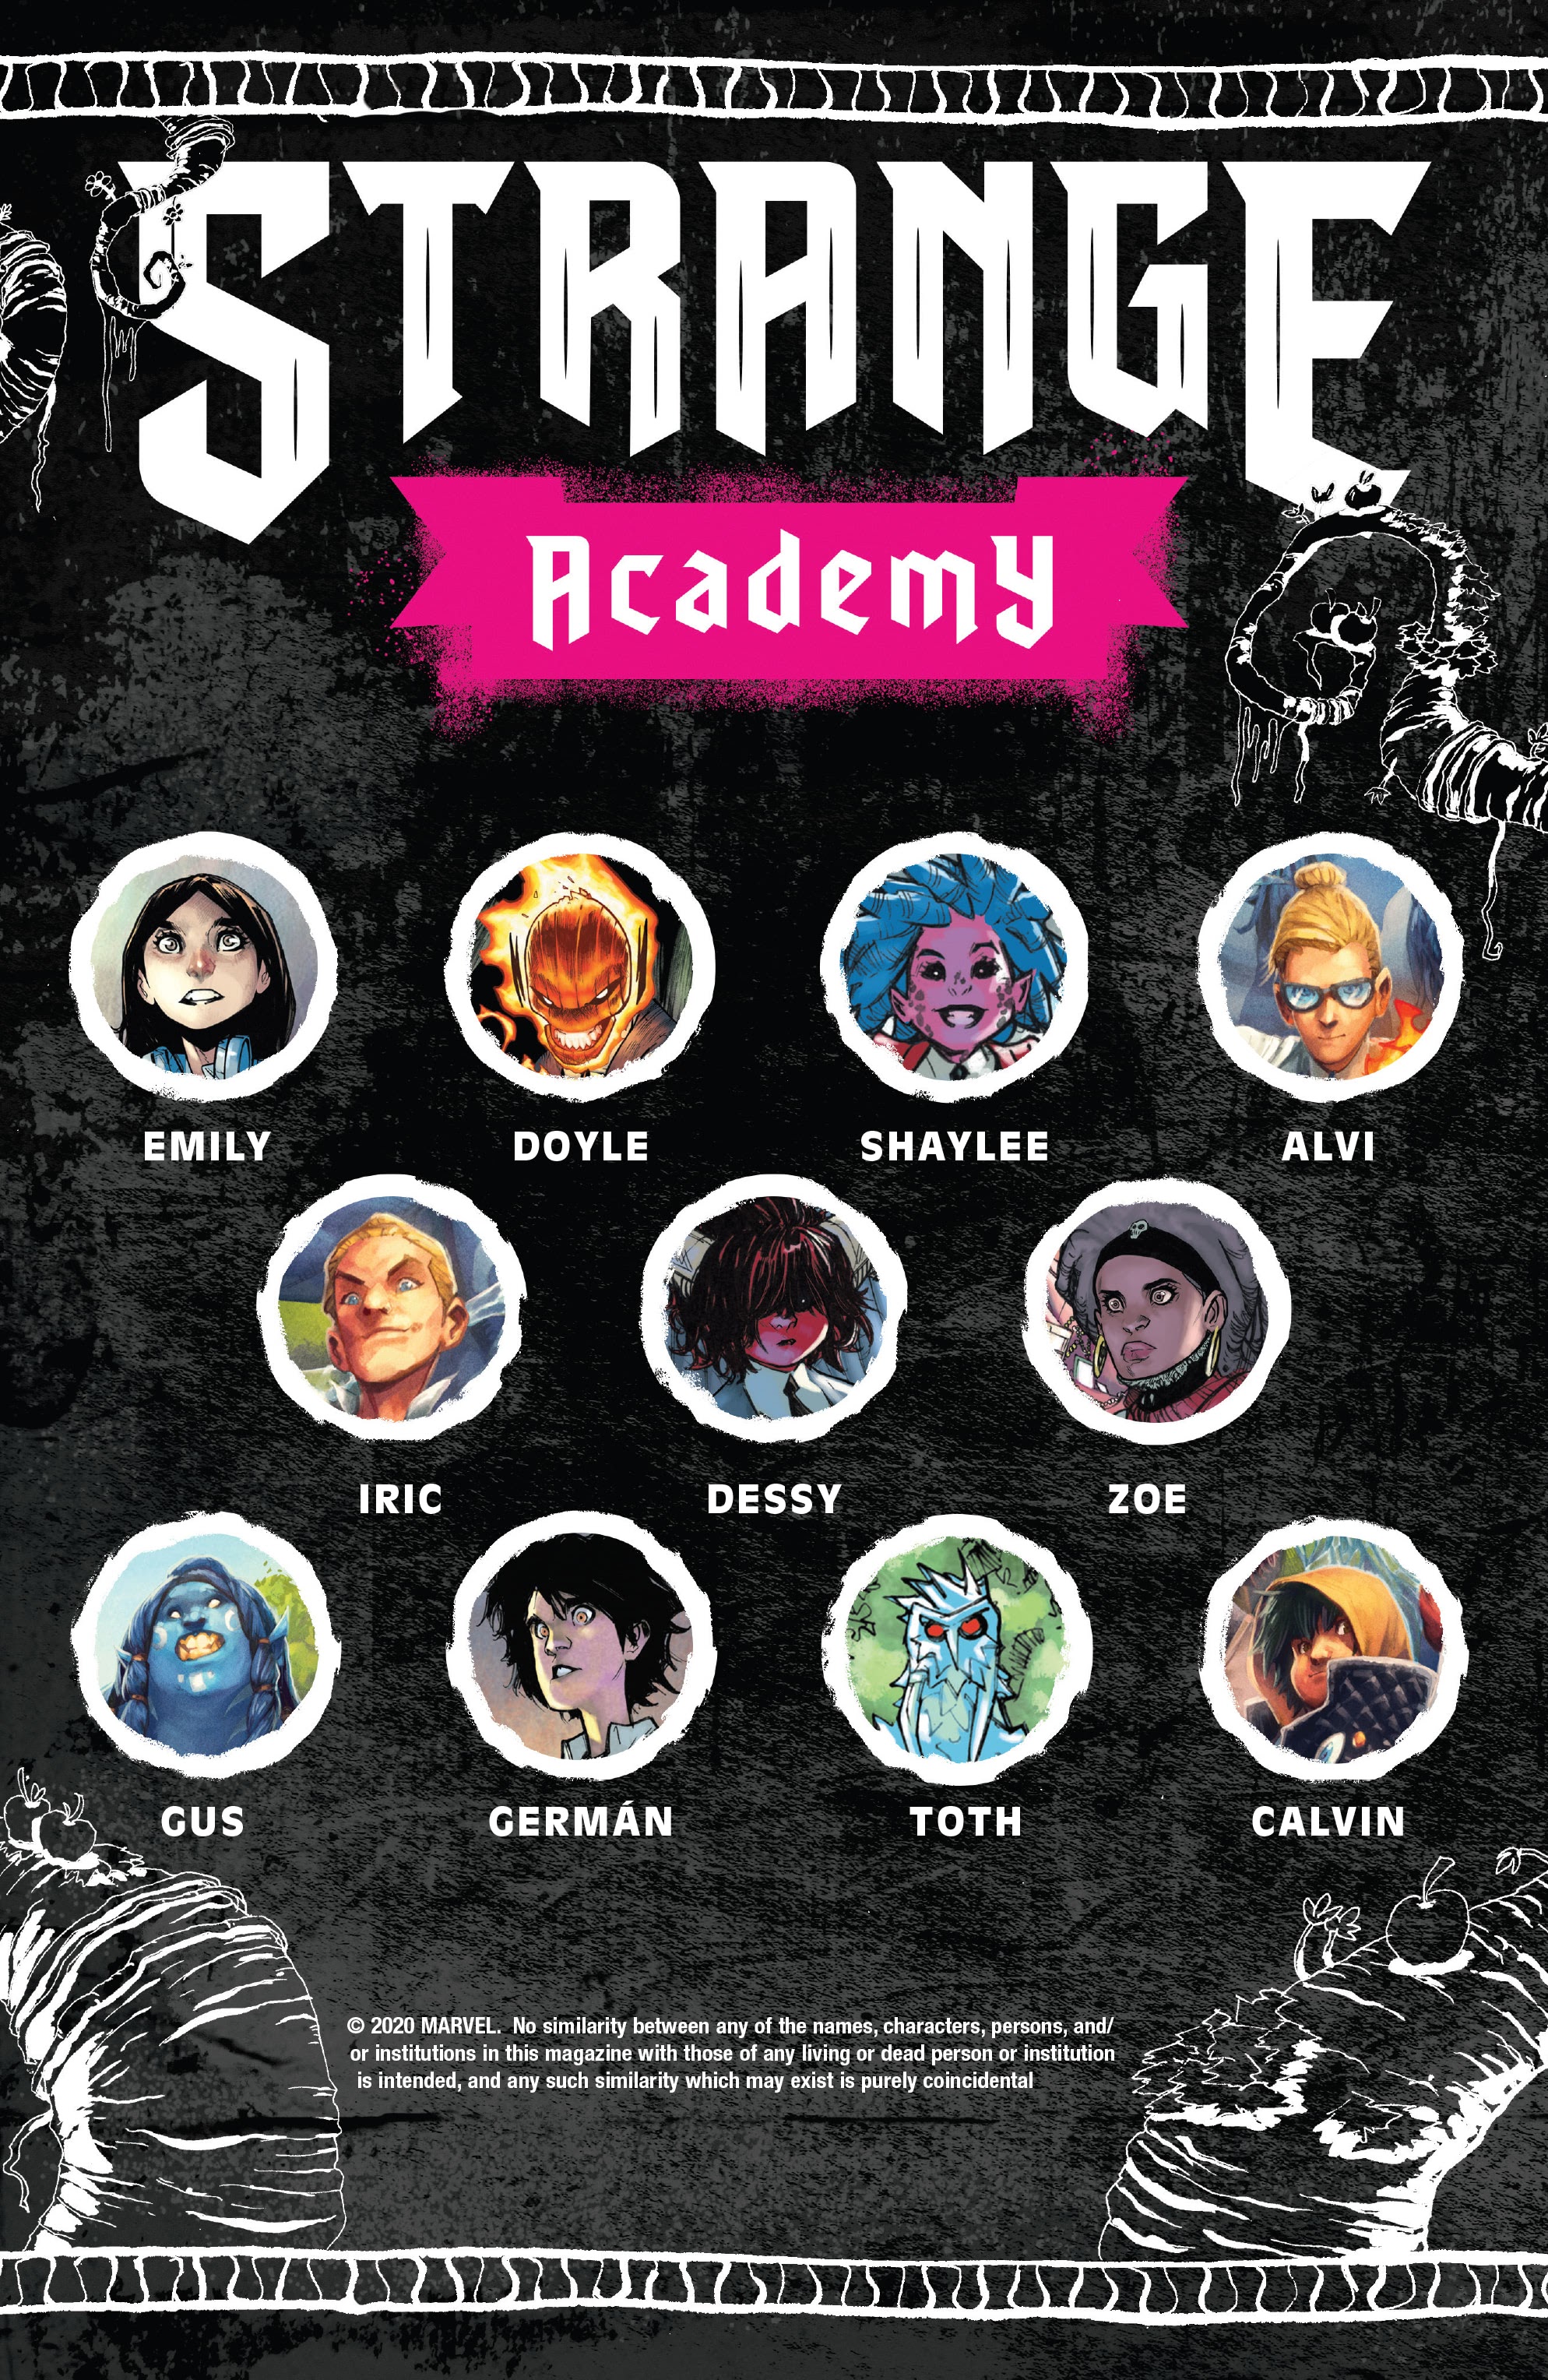 Read online Strange Academy comic -  Issue #4 - 3